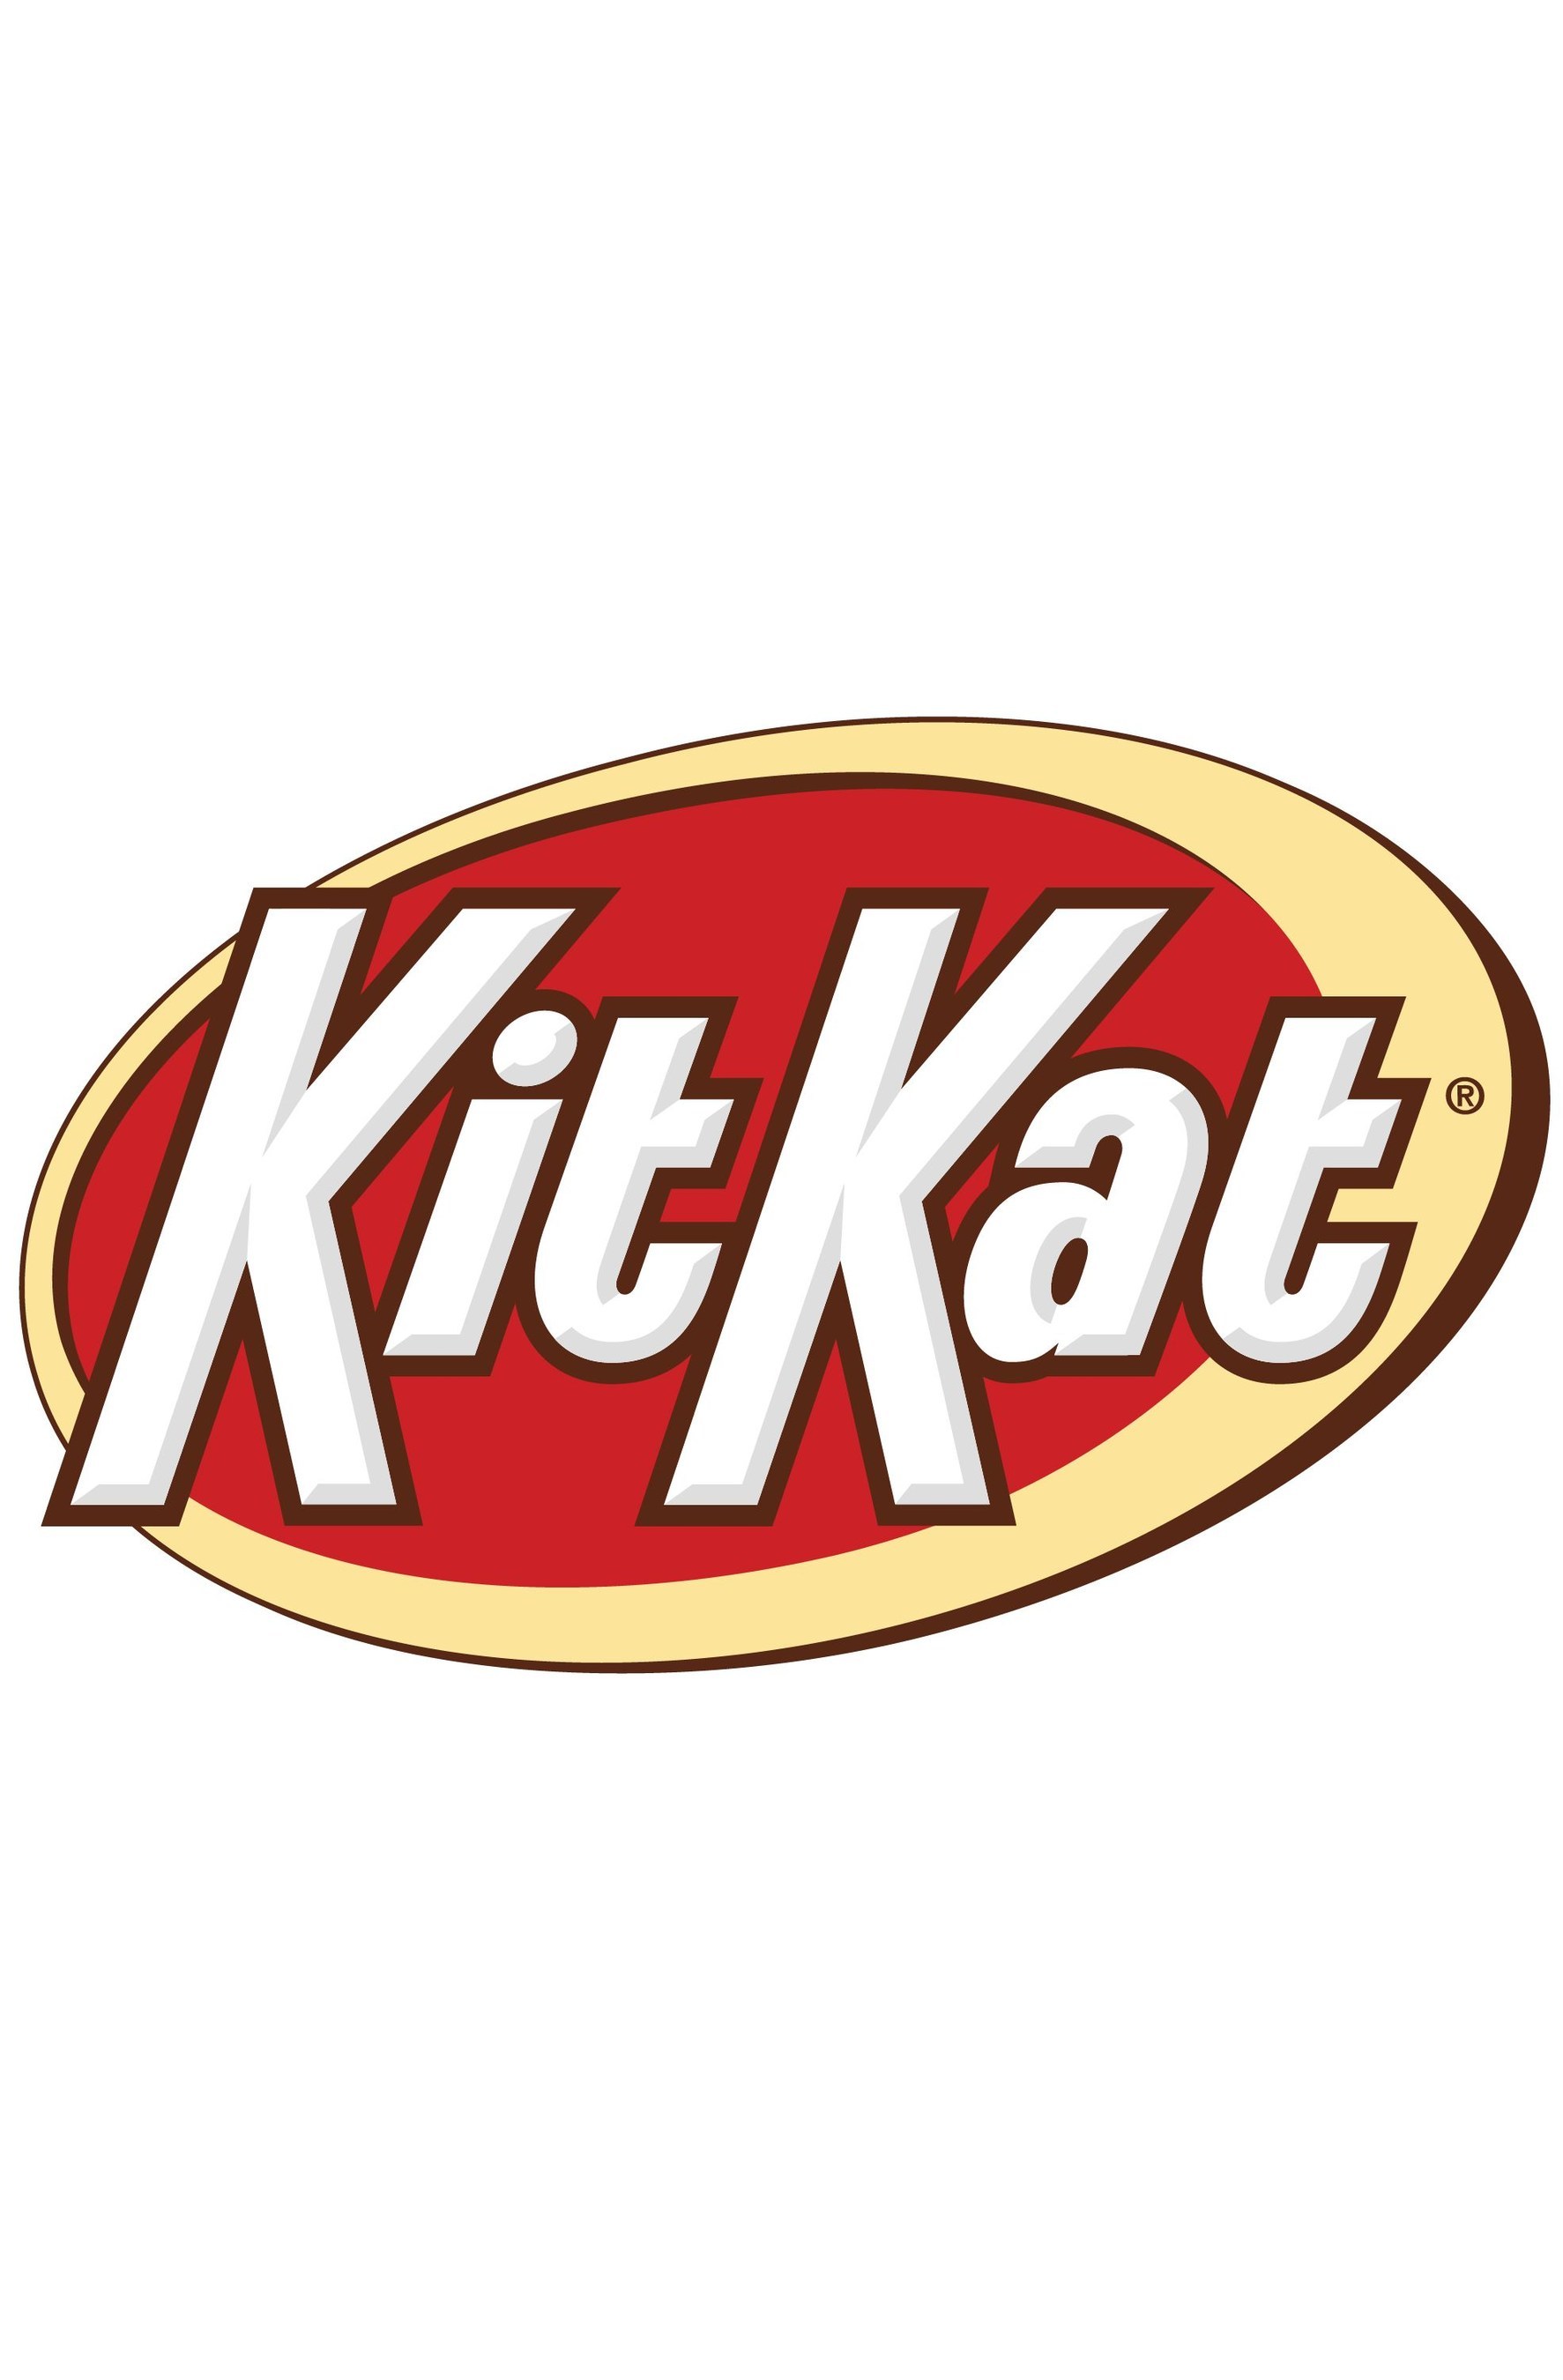 KIT KAT® Brand Expands DUOS Line with New KIT KAT® DUOS MOCHA + CHOCOLATE